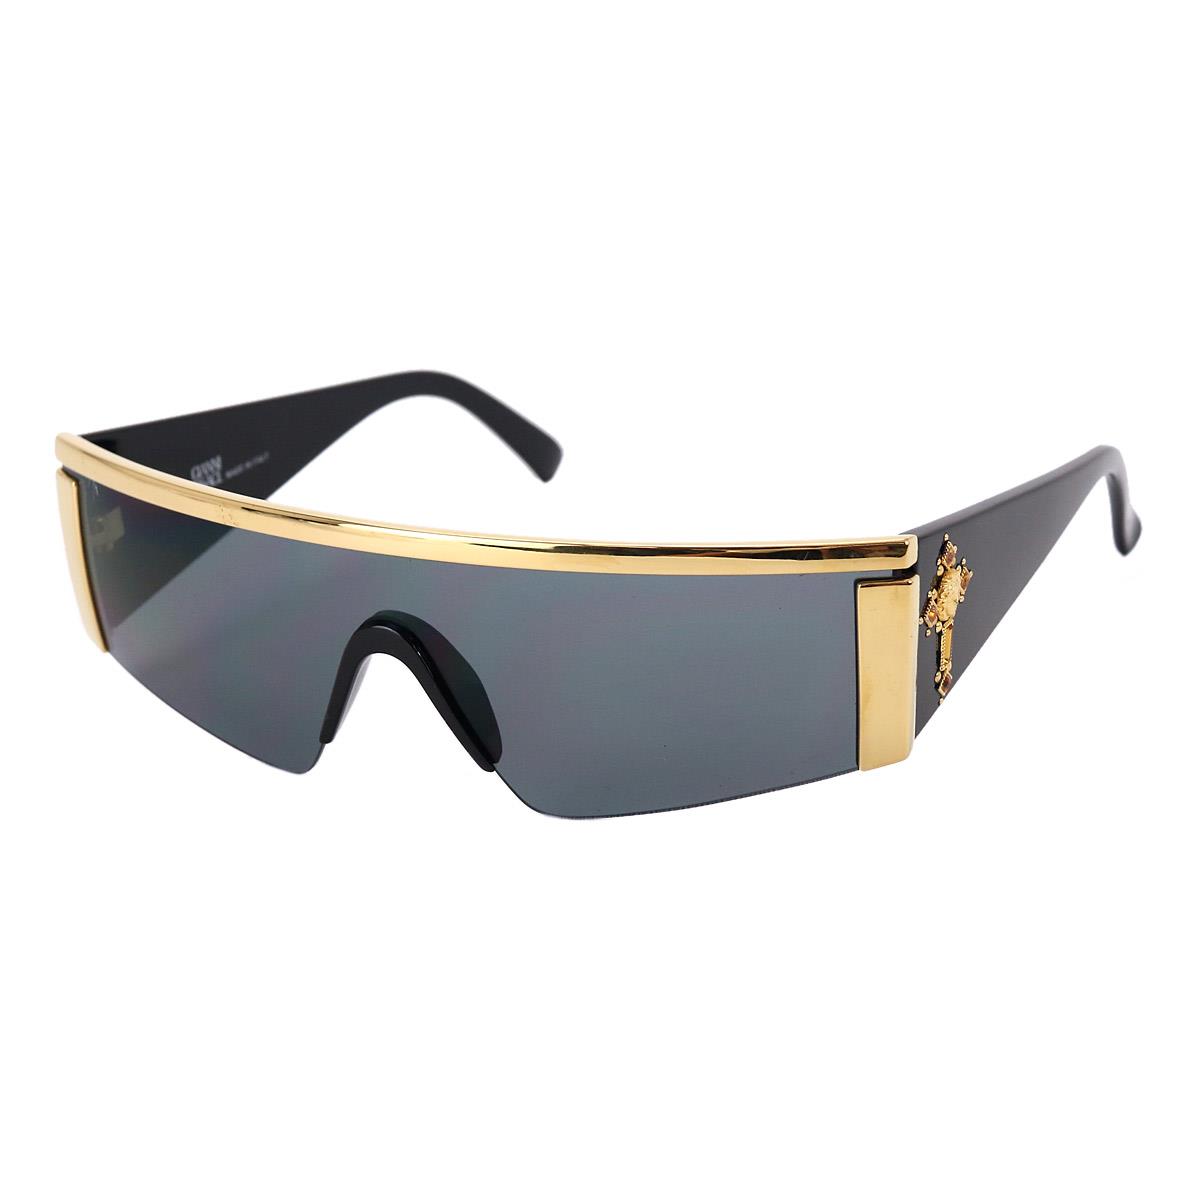 Gianni Versace sunglasses black gold 